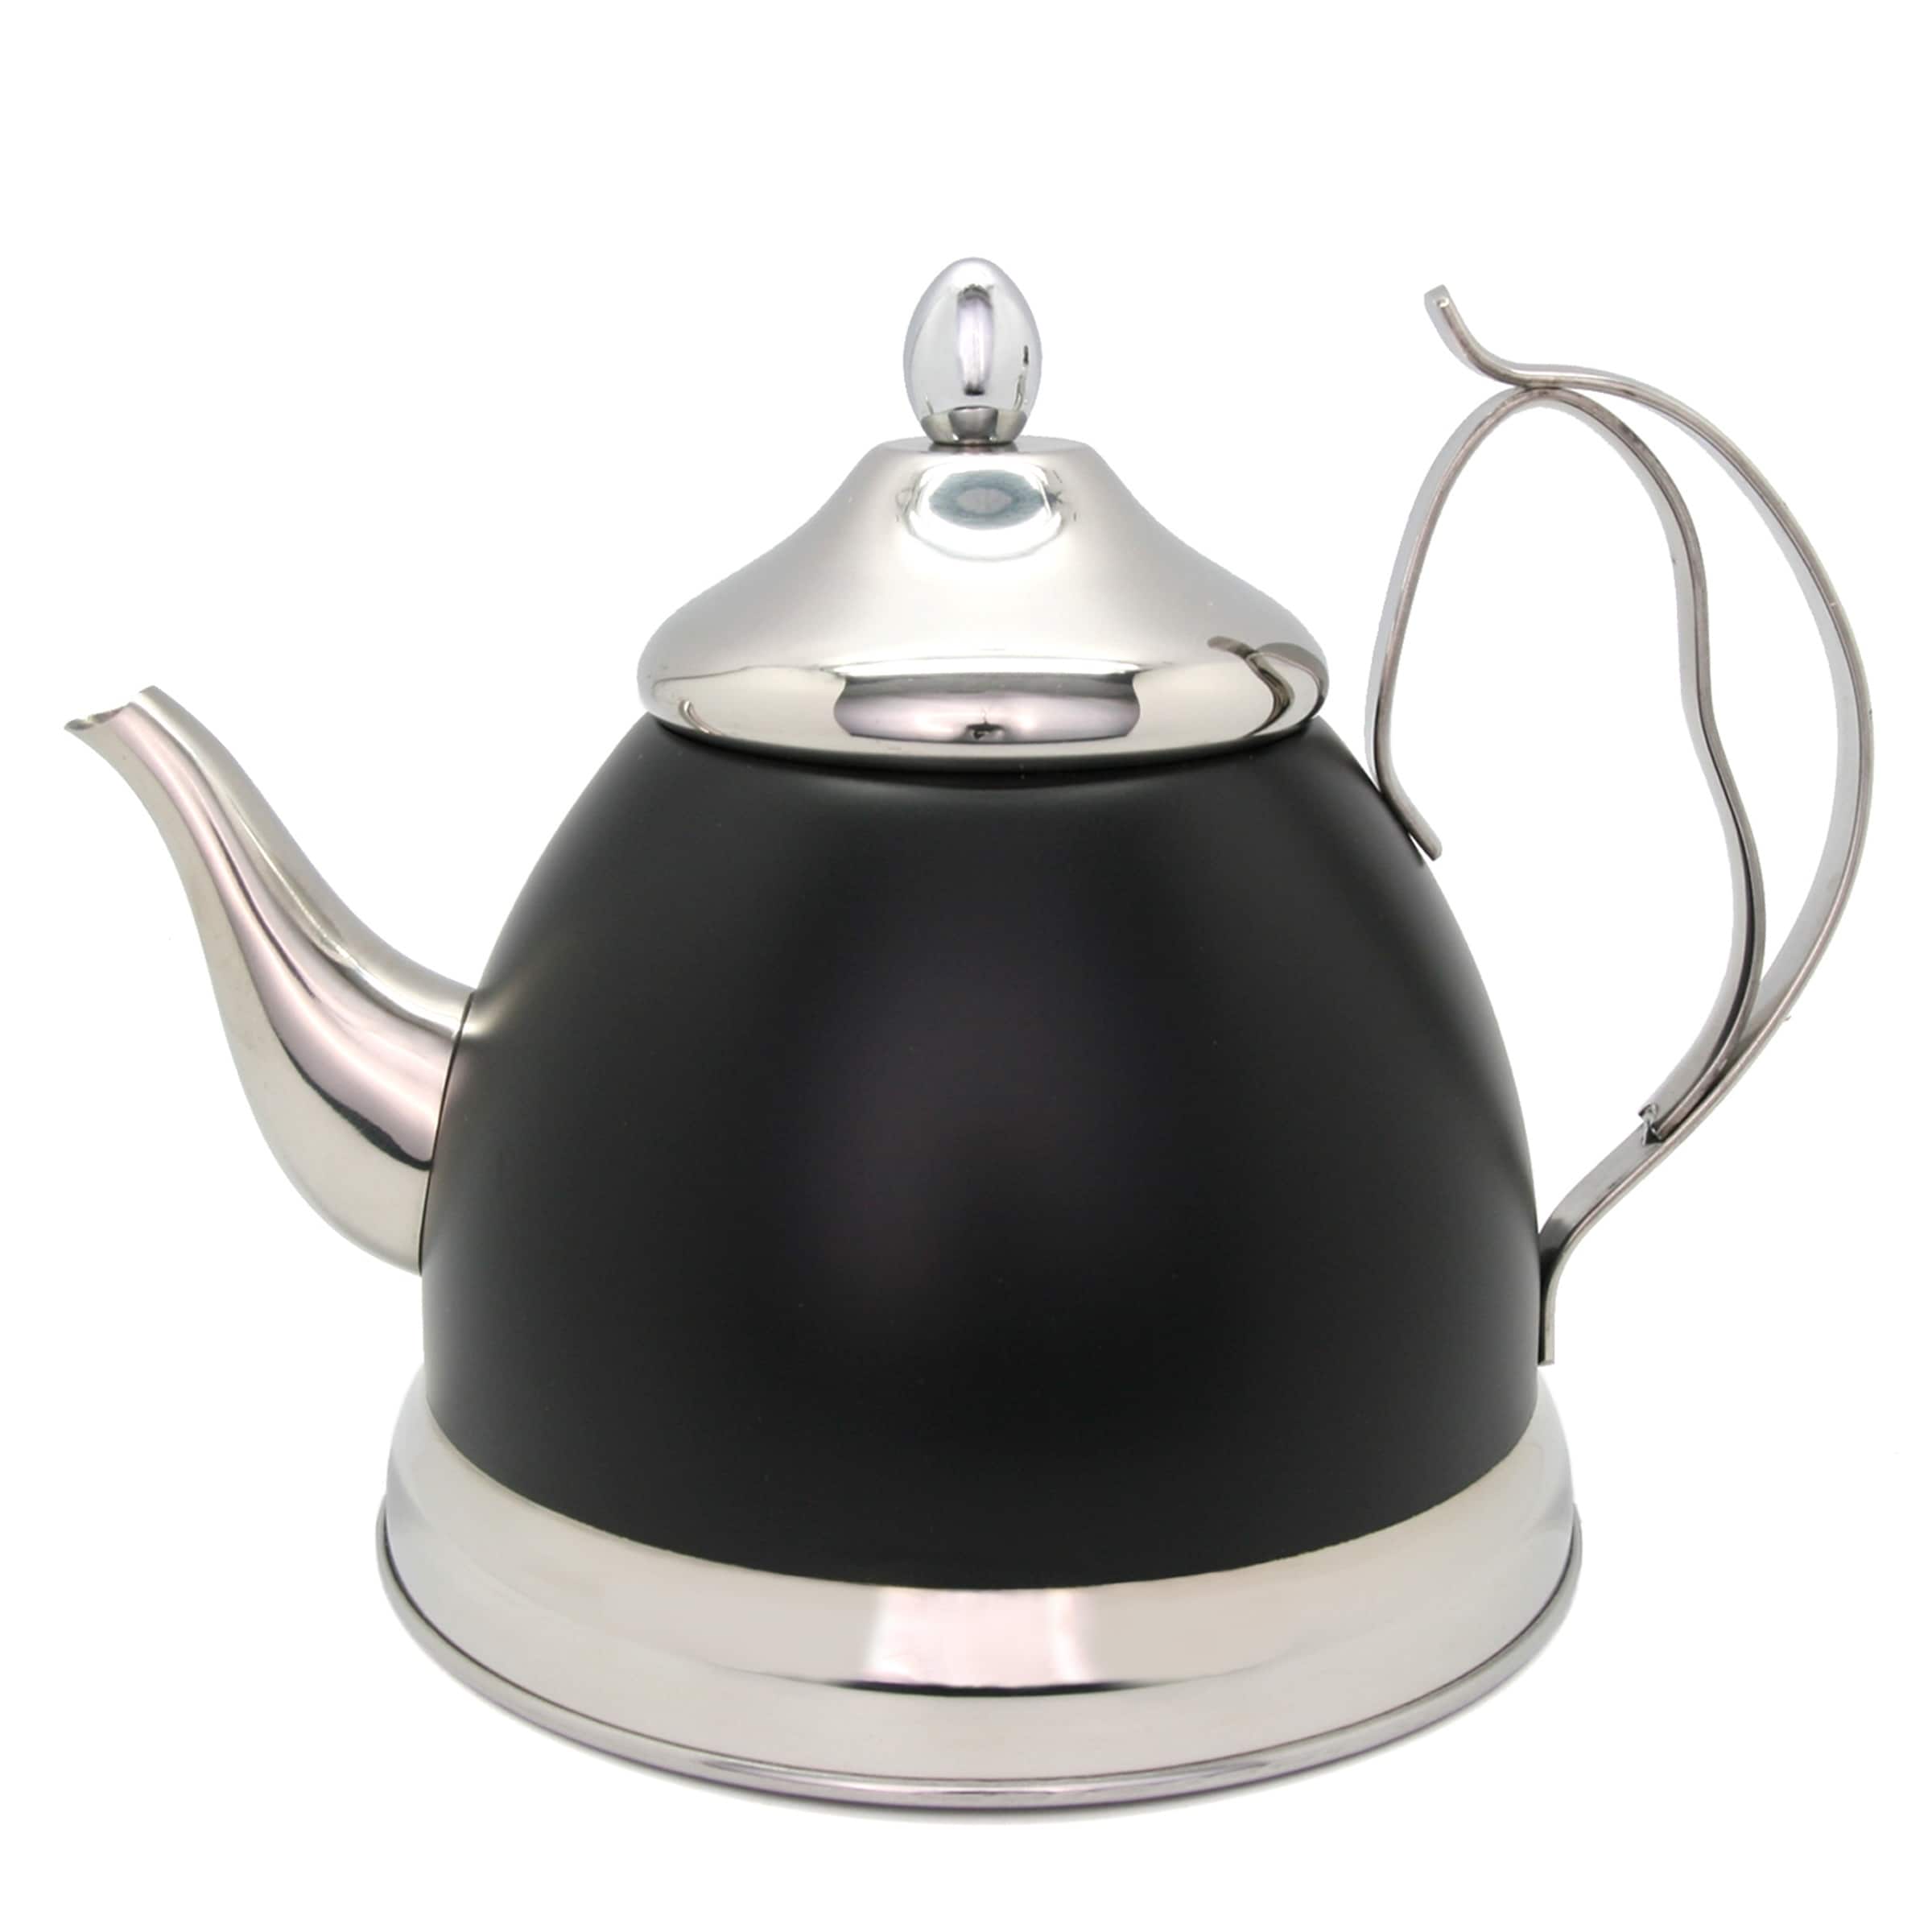 https://ak1.ostkcdn.com/images/products/10668093/Creative-Home-Nobili-Tea-2.0-Qt-Stainless-Steel-Tea-Kettle-Tea-Pot-with-Infuser-Basket-Opaque-Black-cbc504fd-2f8d-4367-8942-2ac674f5e4fd.jpg